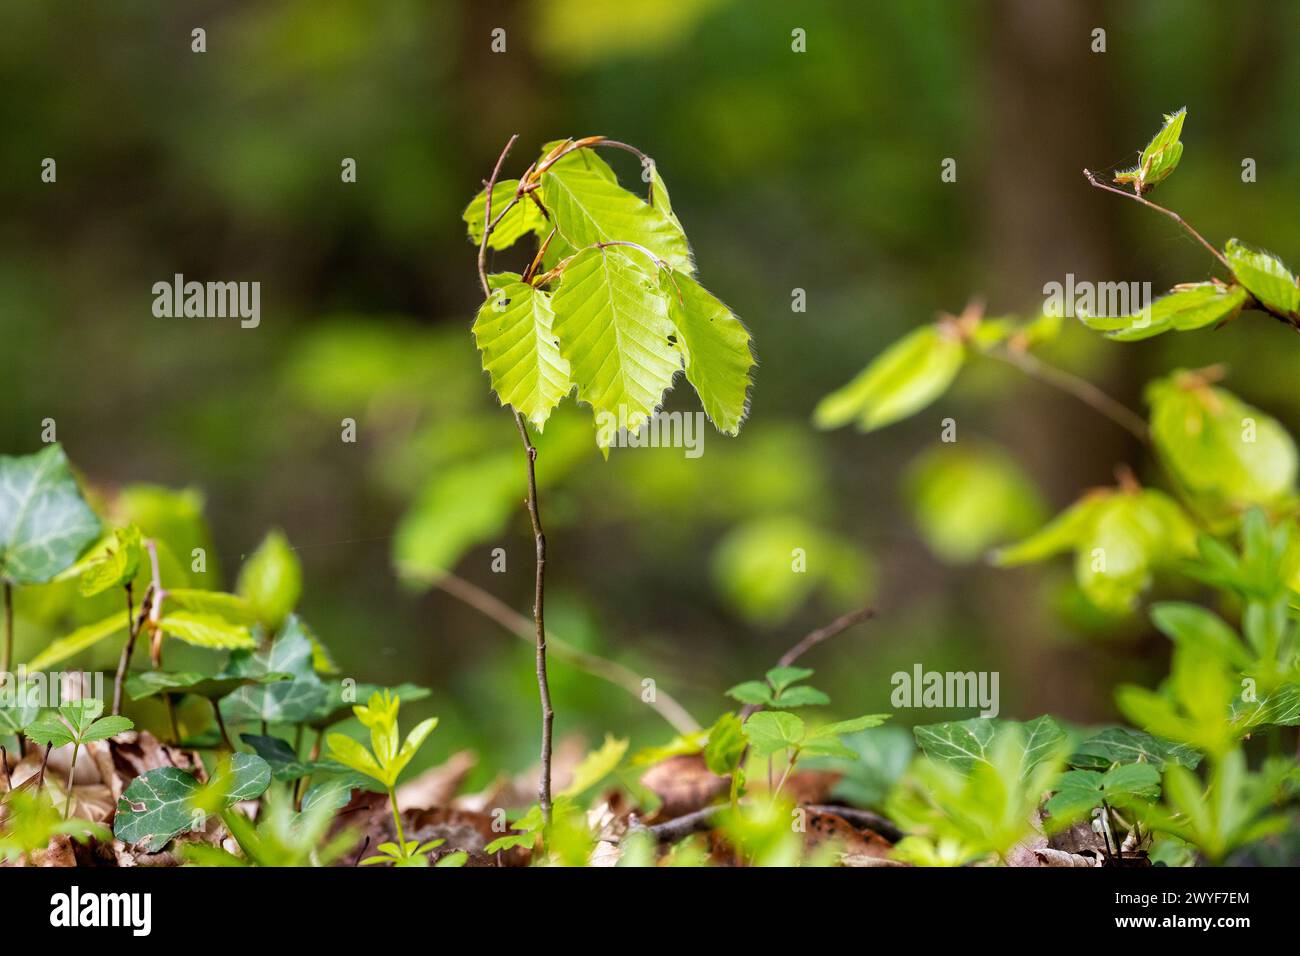 The sapling of Fagus sylvatica, the European beech or common beech on a forest floor Stock Photo